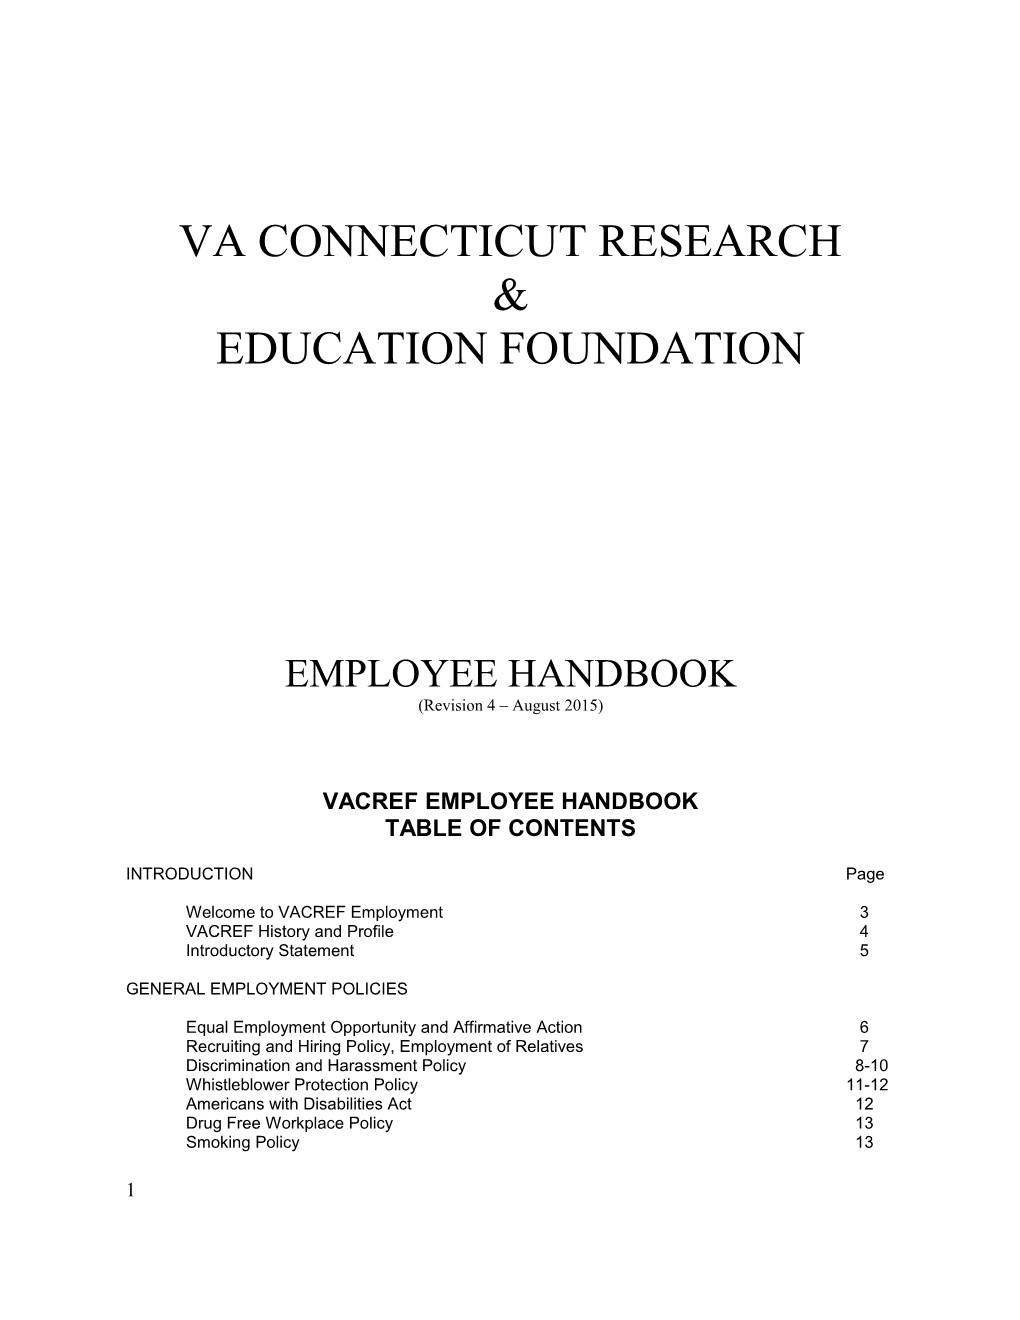 Va Connecticut Research